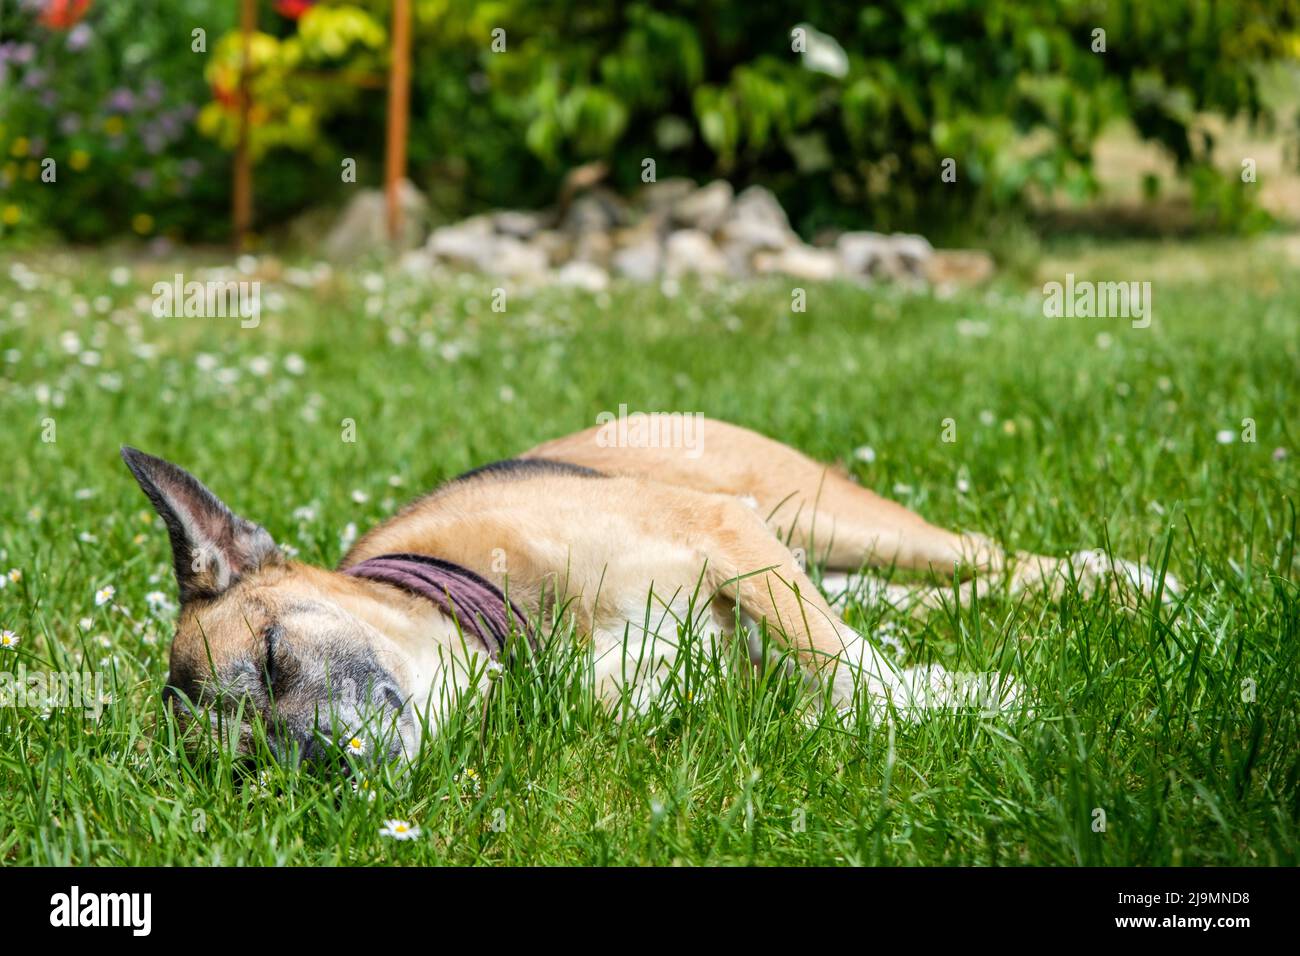 Cane addormentato in erba | Chien batard endormi sur le gazon d'un jardin Foto Stock